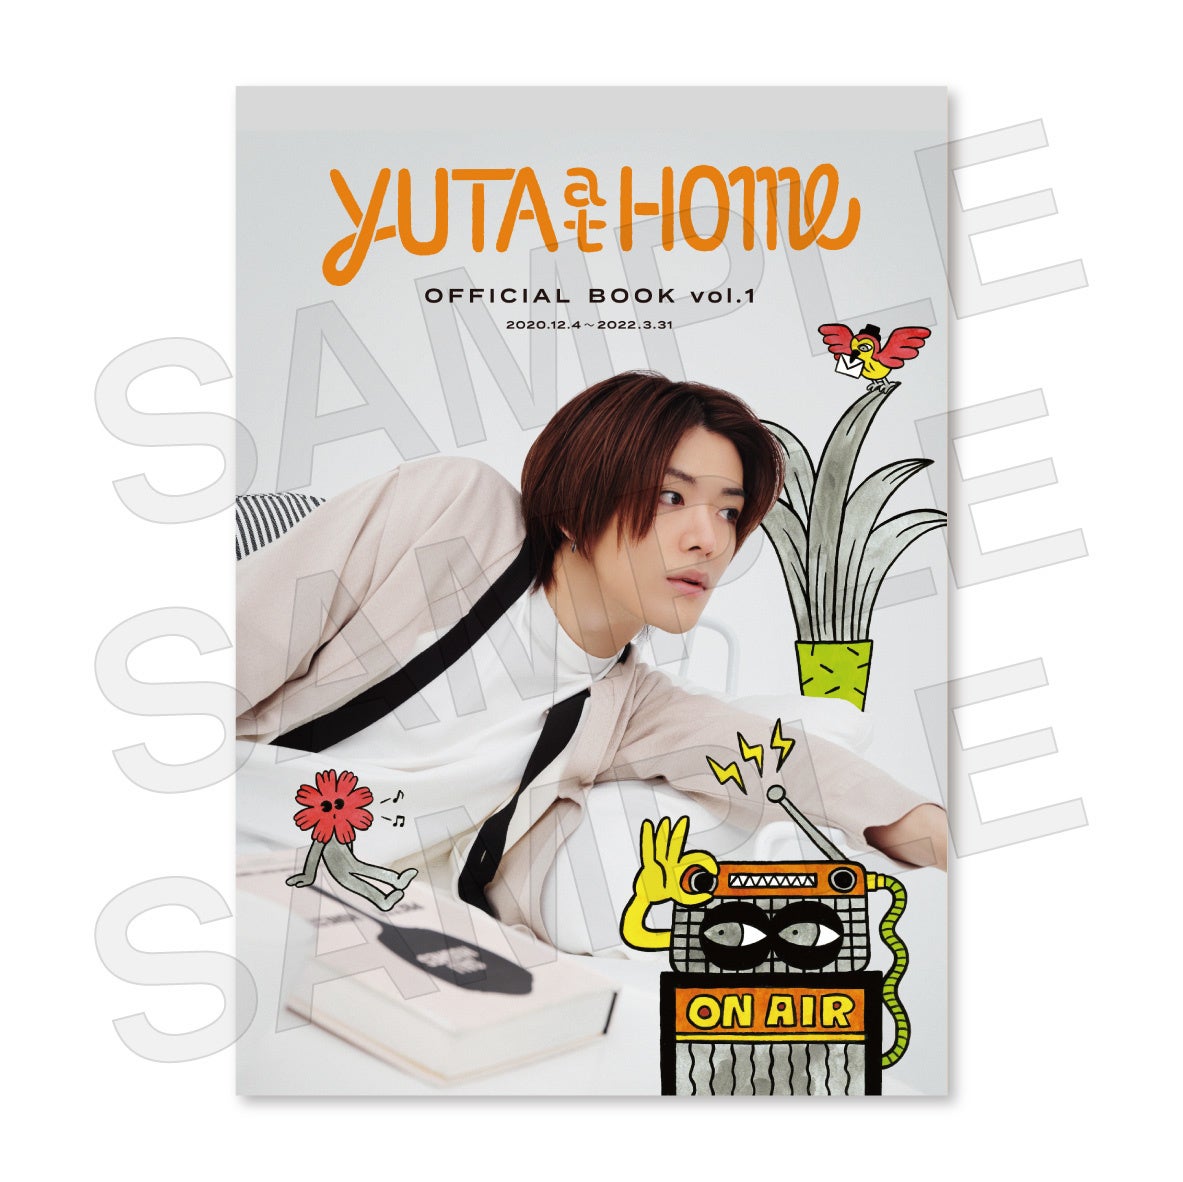 JFN系列全国ネットFM番組「NCT 127 ユウタのYUTA at Home」公式ブック『YUTA at Home OFFICIAL BOOK vol.1』2022年7月1日（金）発売決定！